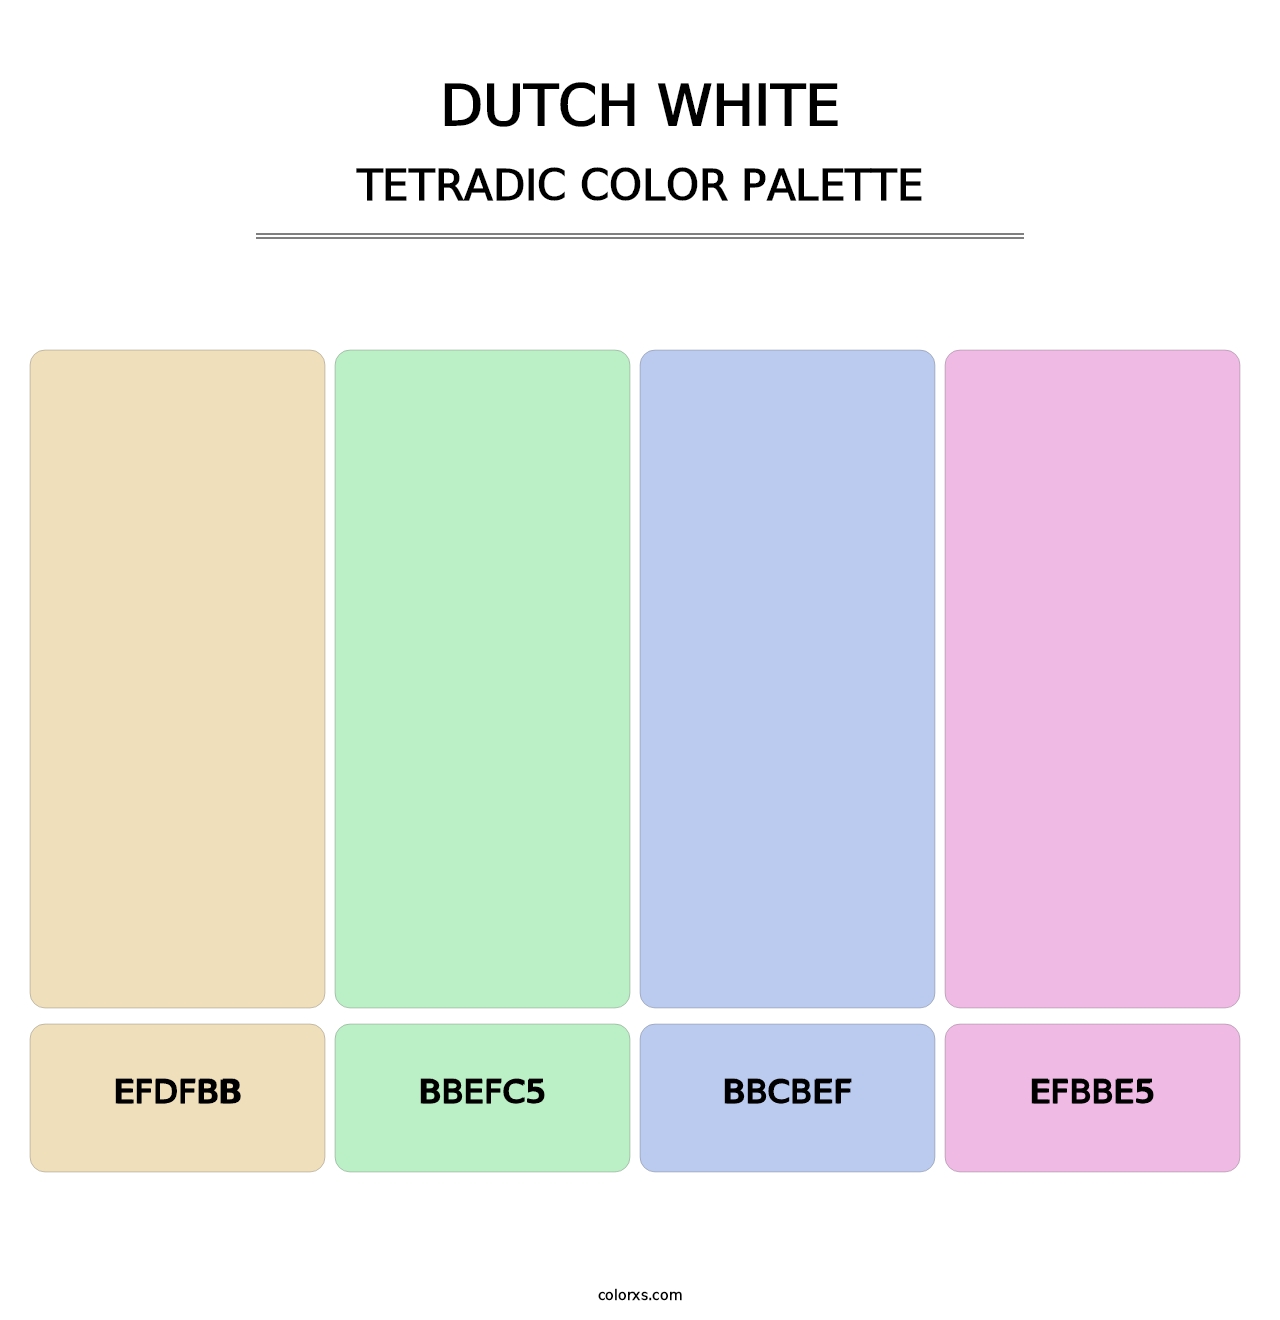 Dutch White - Tetradic Color Palette